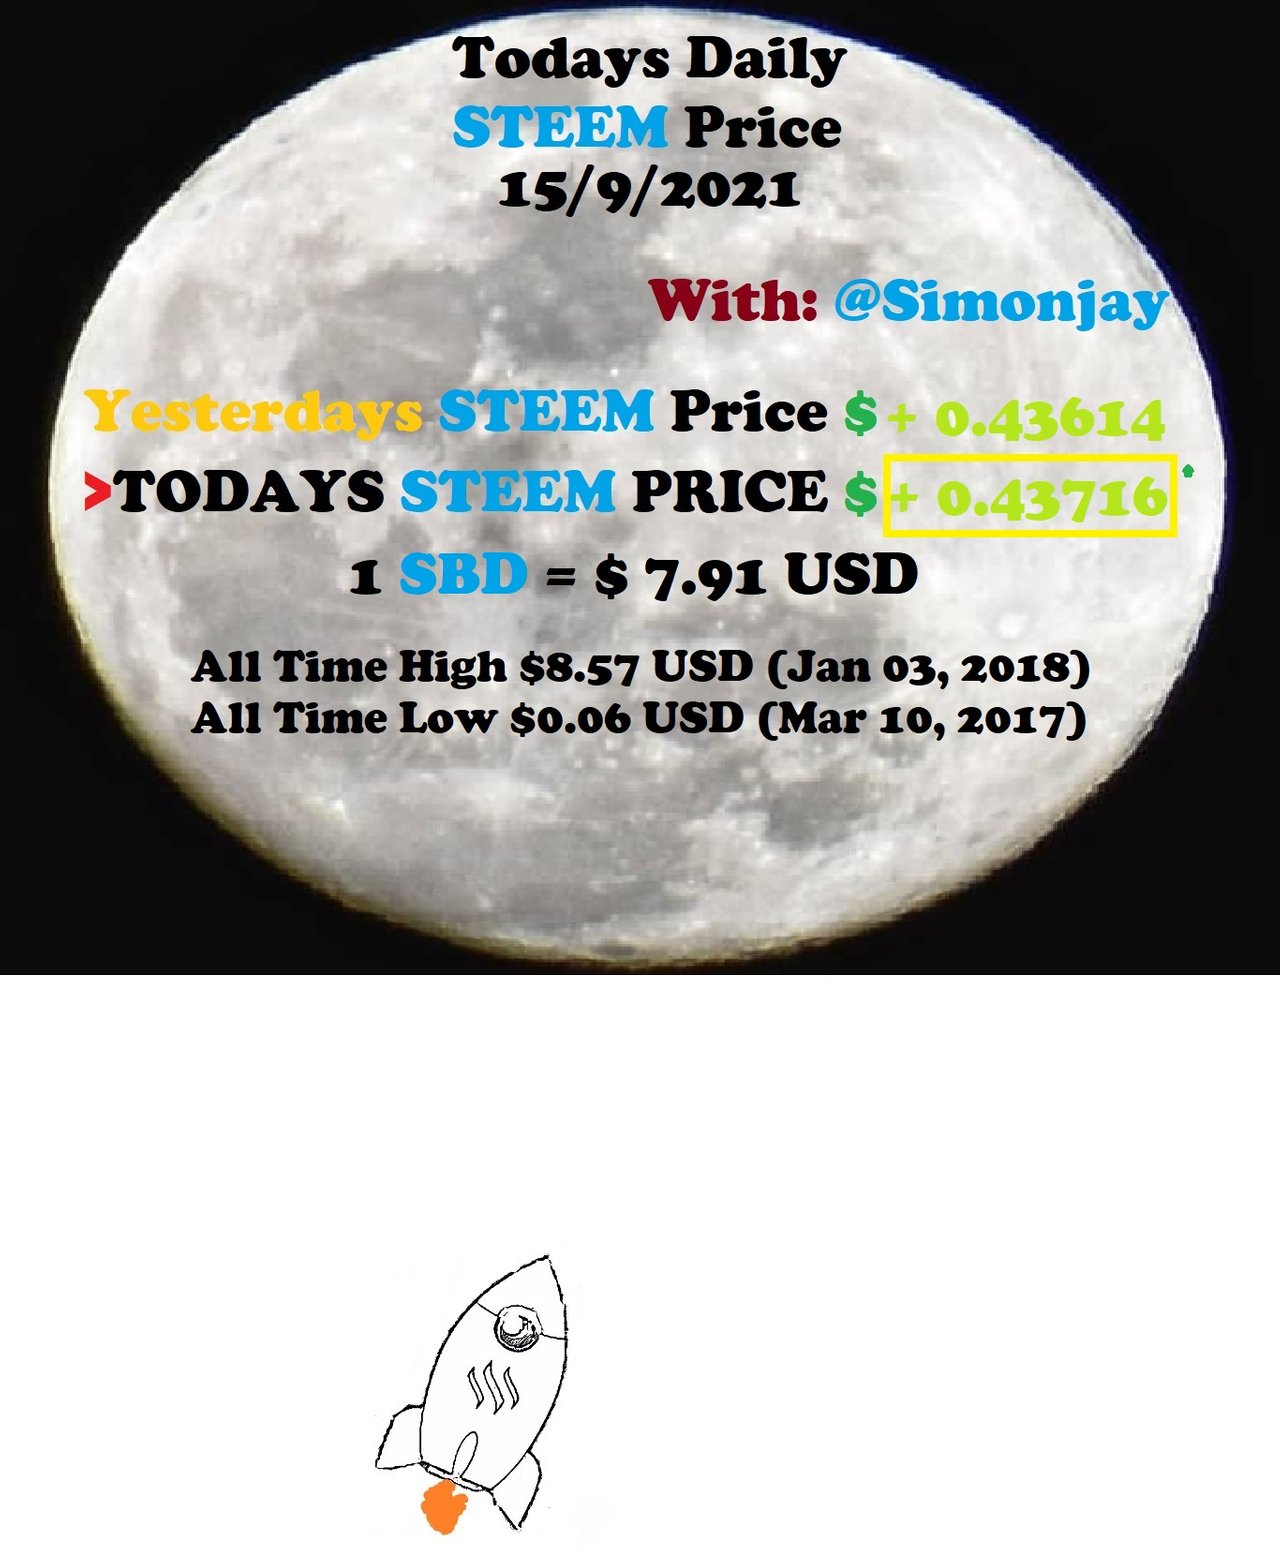 Steem Daily Price MoonTemplate15092021.jpg